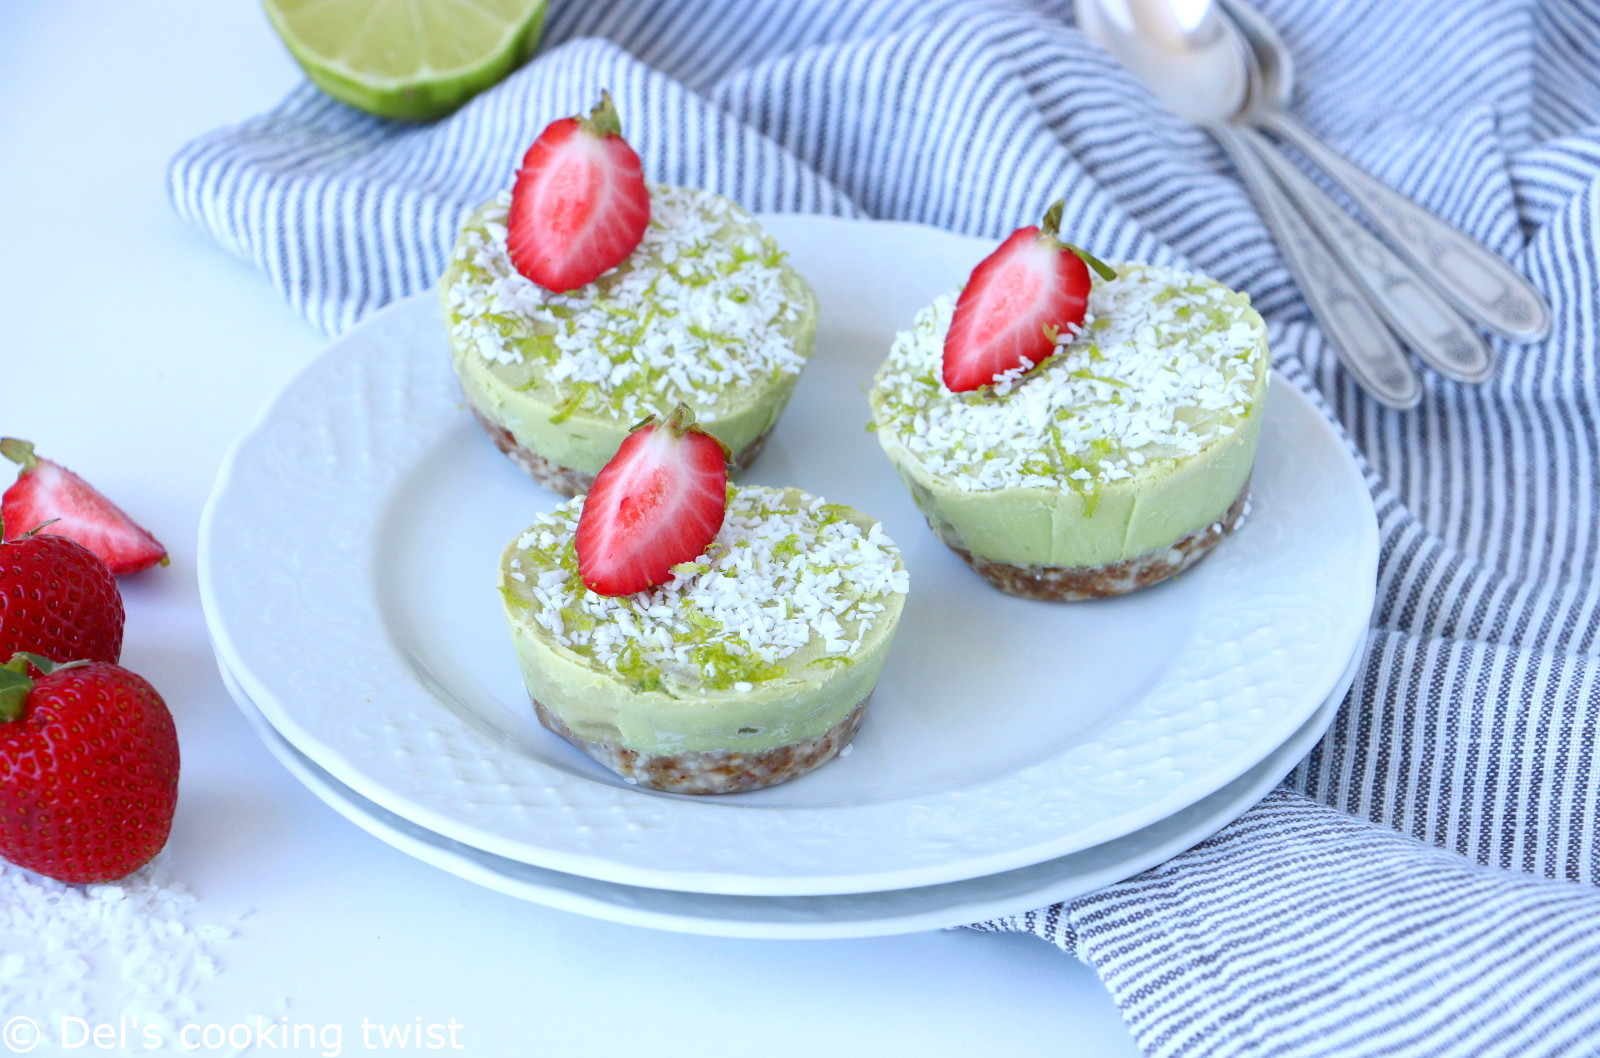 Healthy Key Lime Pie
 Mini key lime pies "healthy" — Del s cooking twist